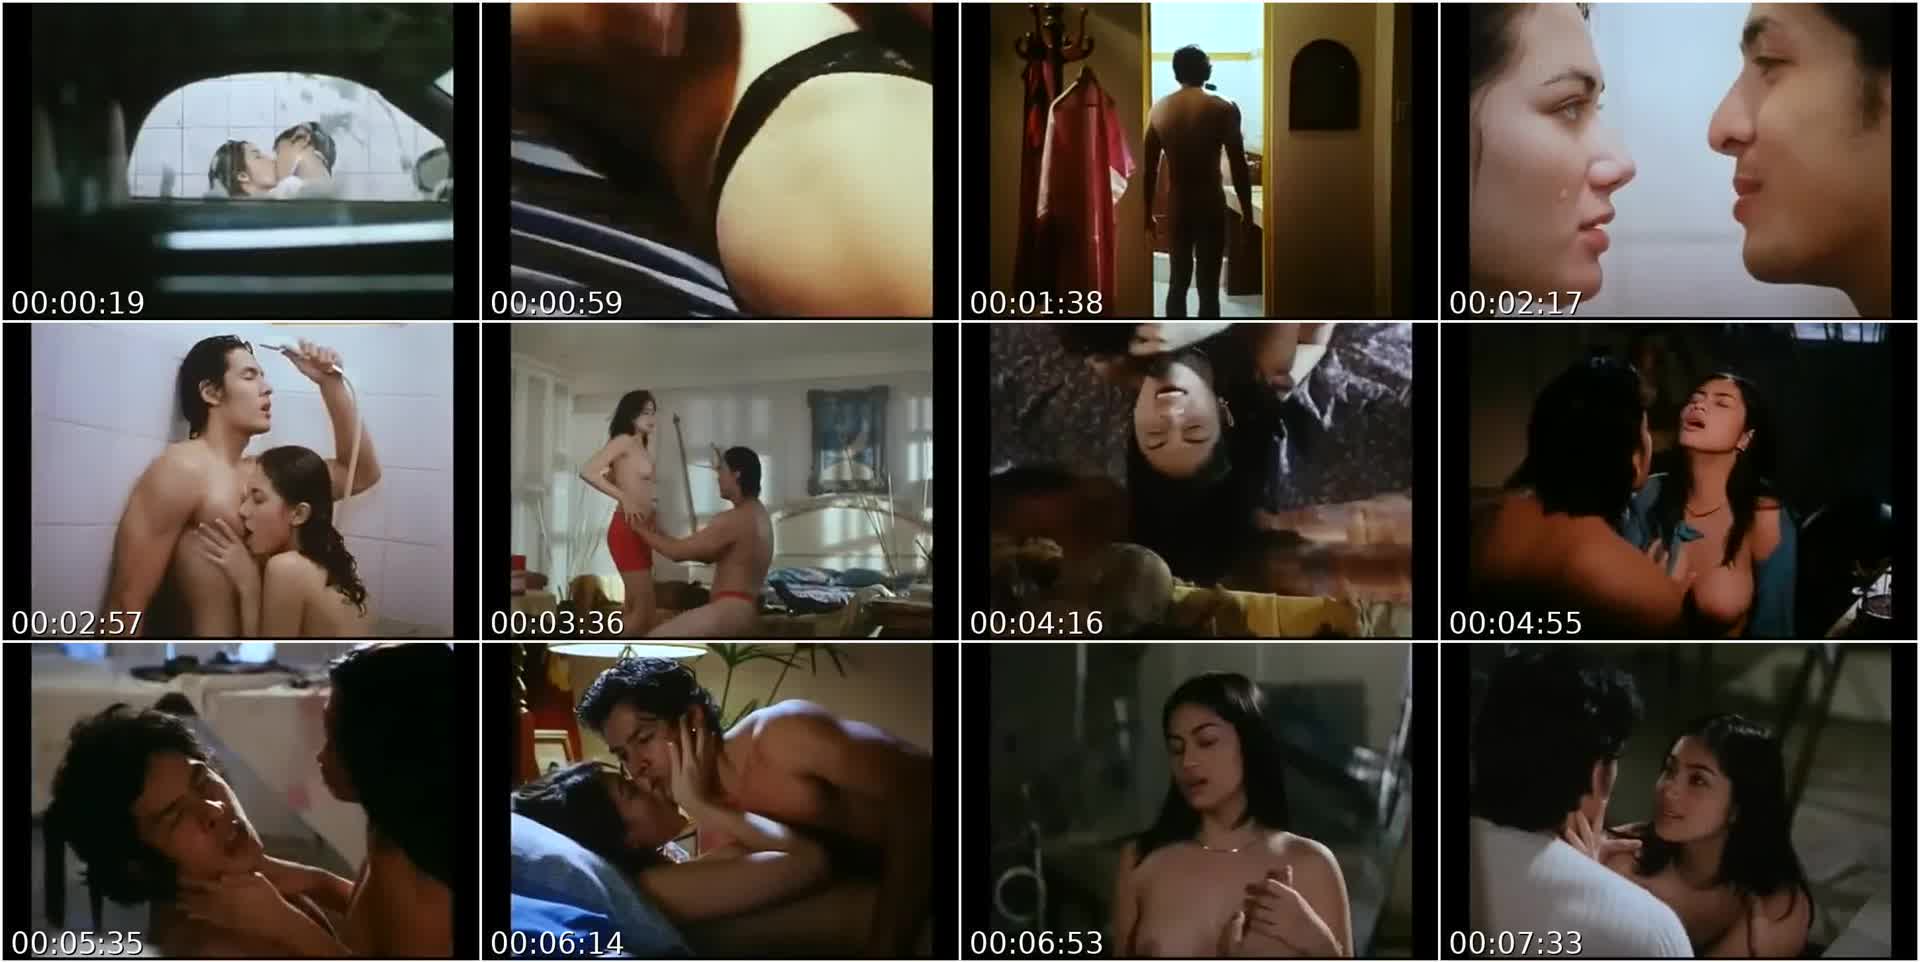 Liberated 2 sex scenes